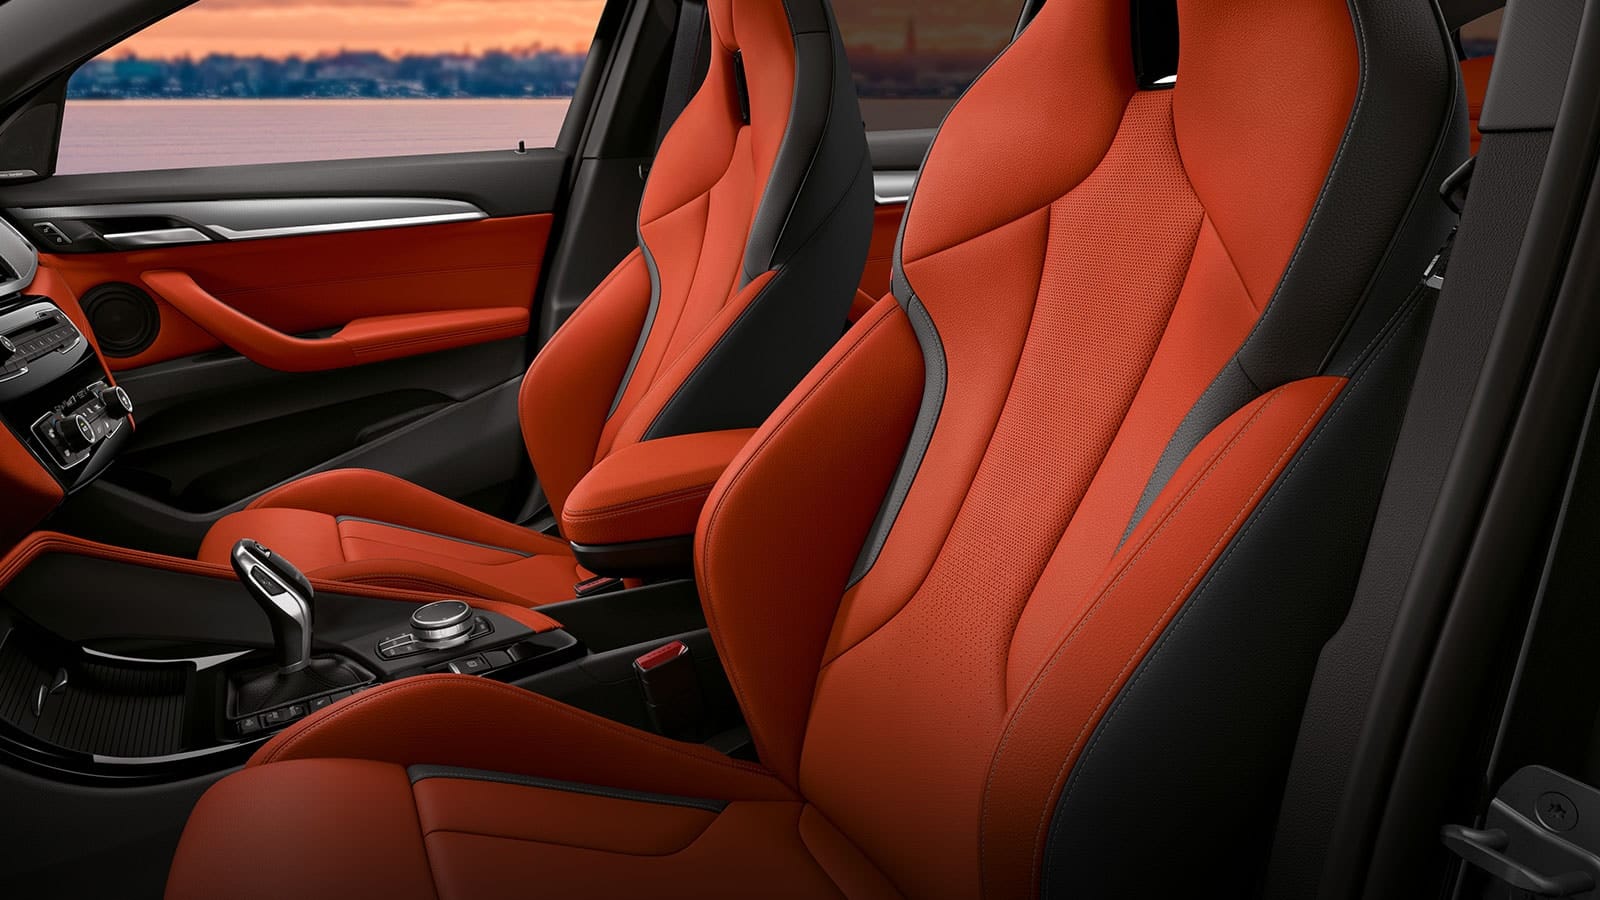 2022 BMW X2 Interior